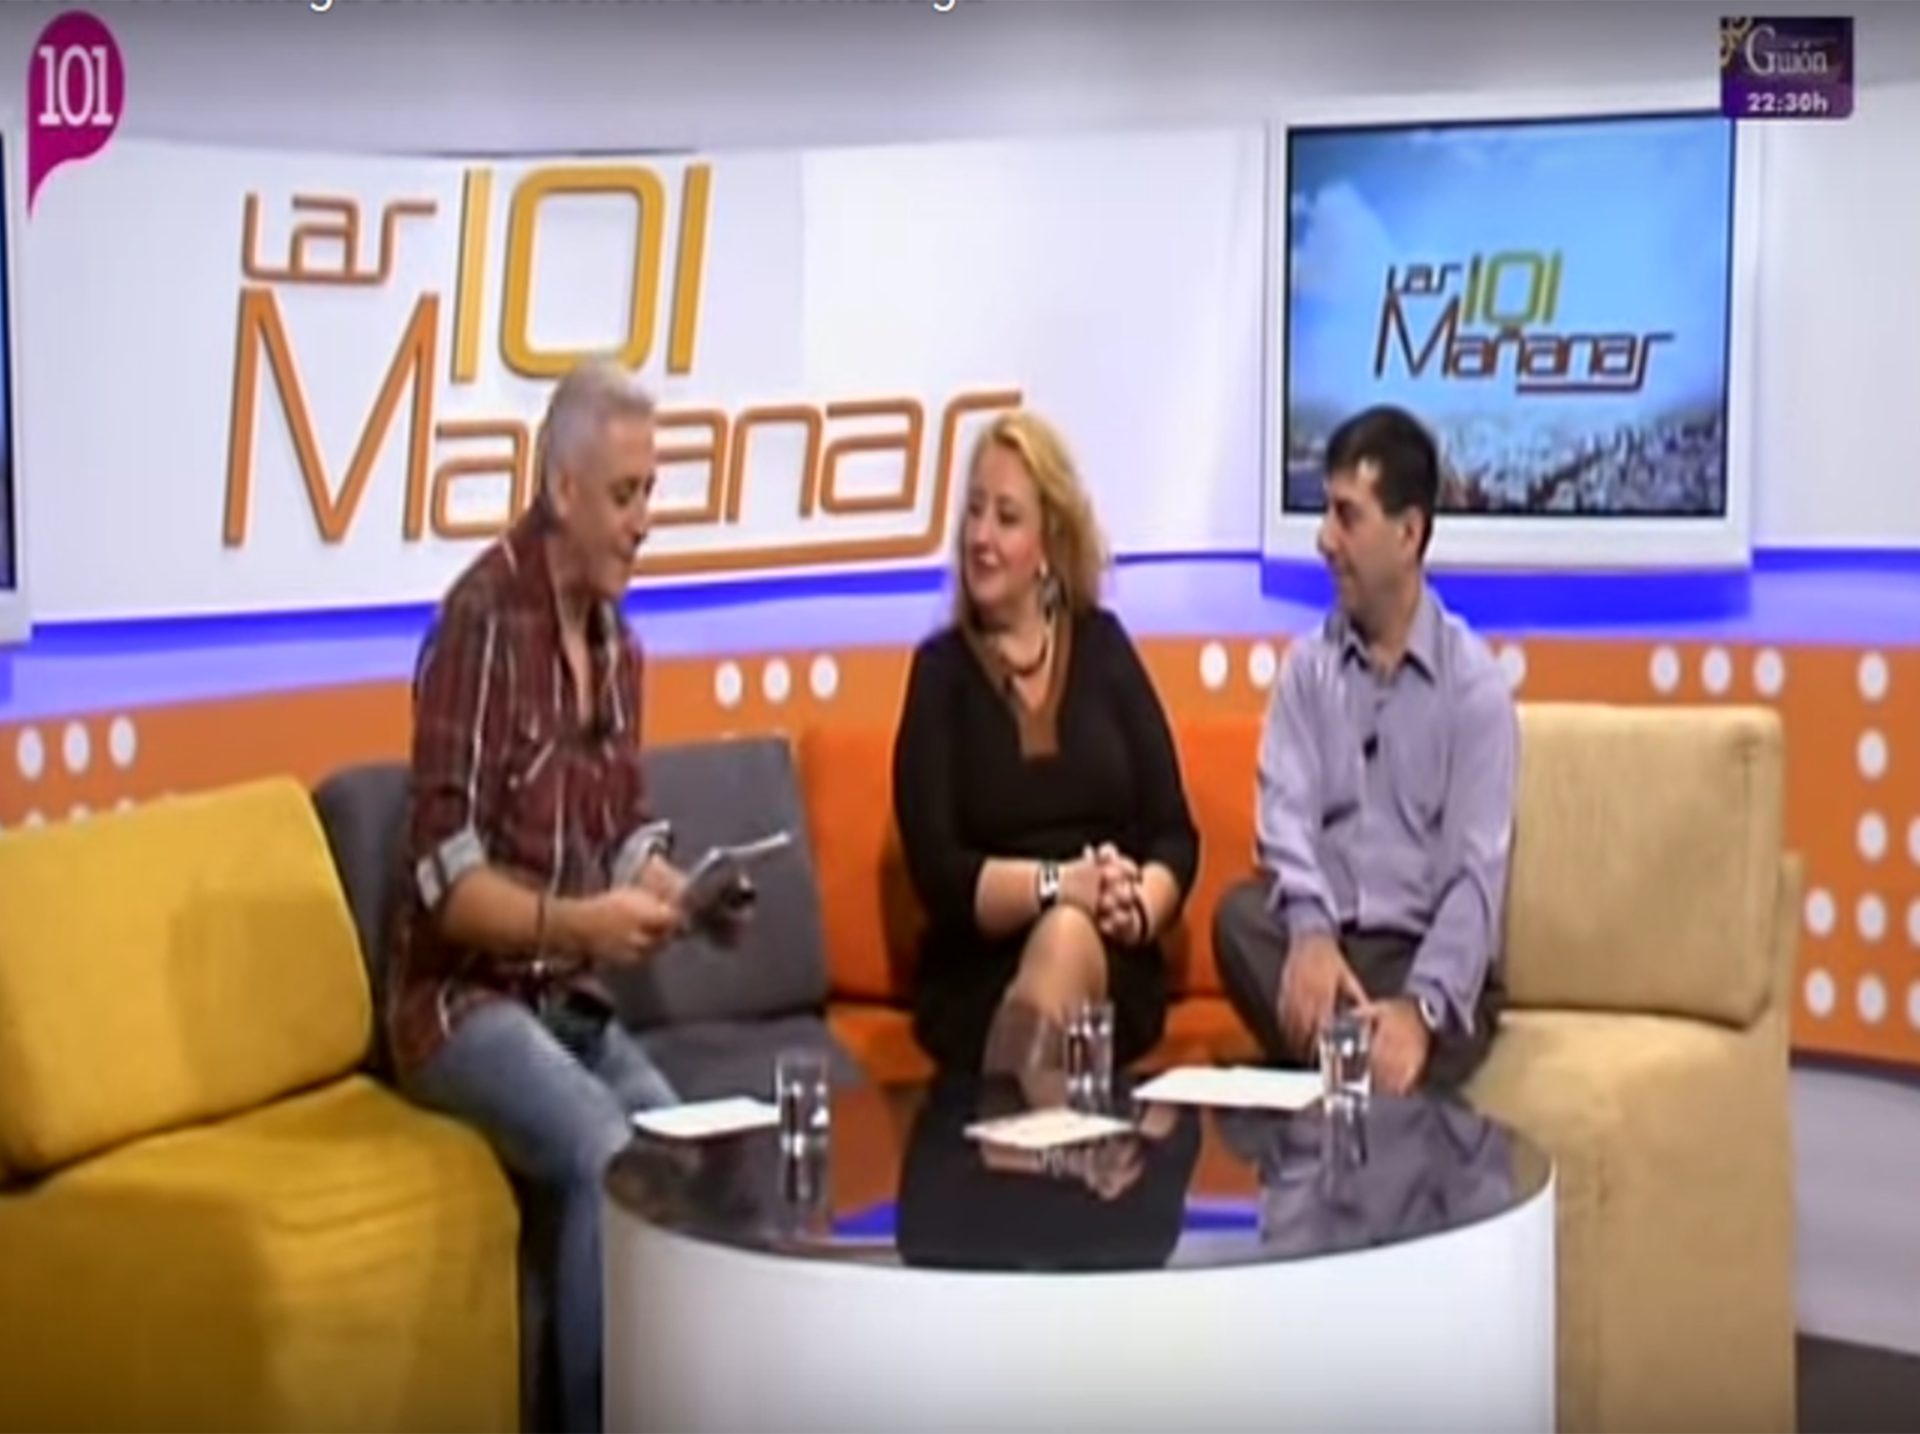 entrevista asociacion tdah malaga 101 TV Malaga VIII Semana Europea TDAH Las Mañanas 101 Eduardo Bandera trastorno por deficit atencion e hiperactividad